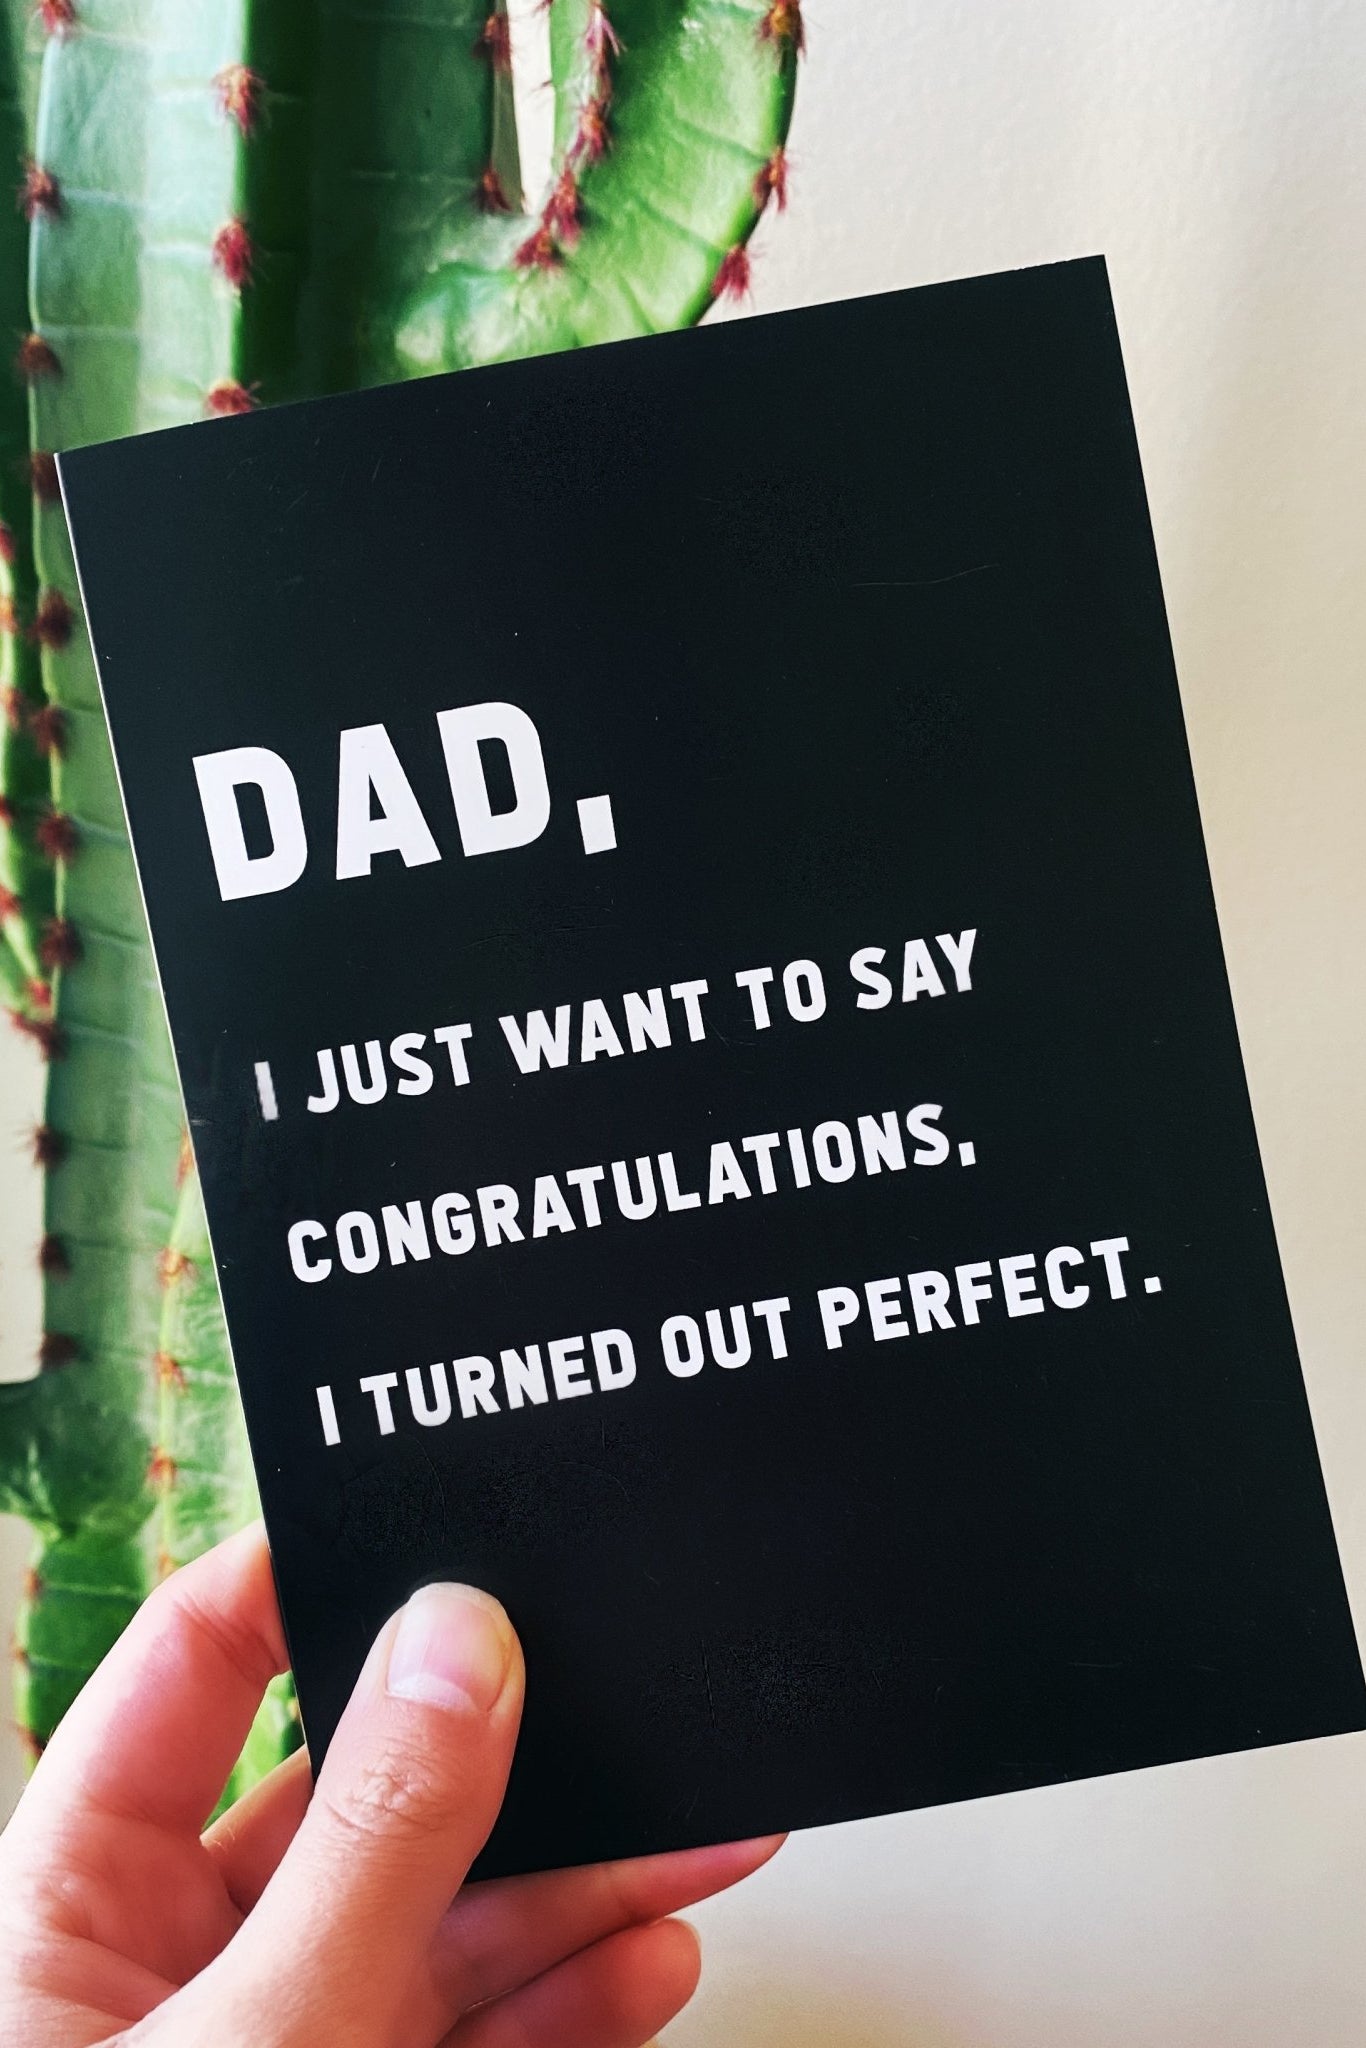 Dad Congratulations I turned Out Perfect Card - UntamedEgo LLC.